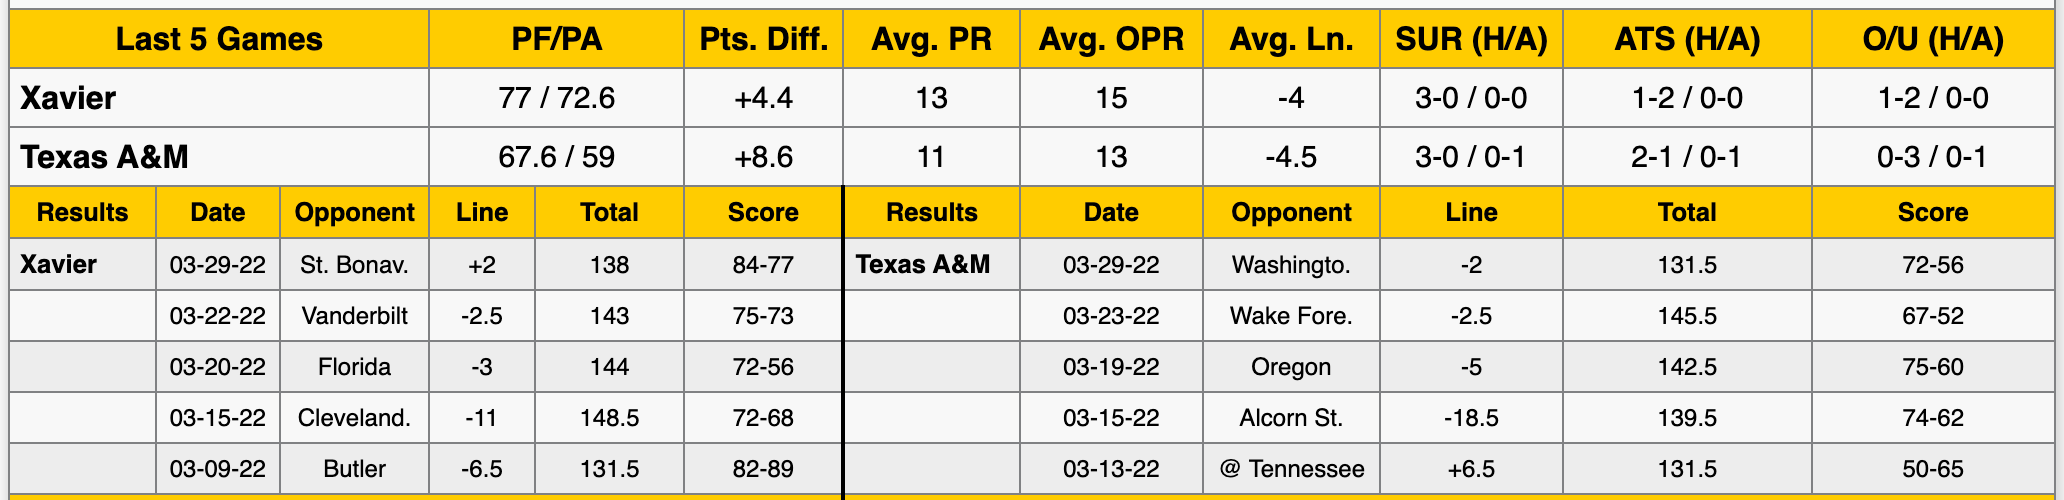 Xavier vs Texas A&M Data